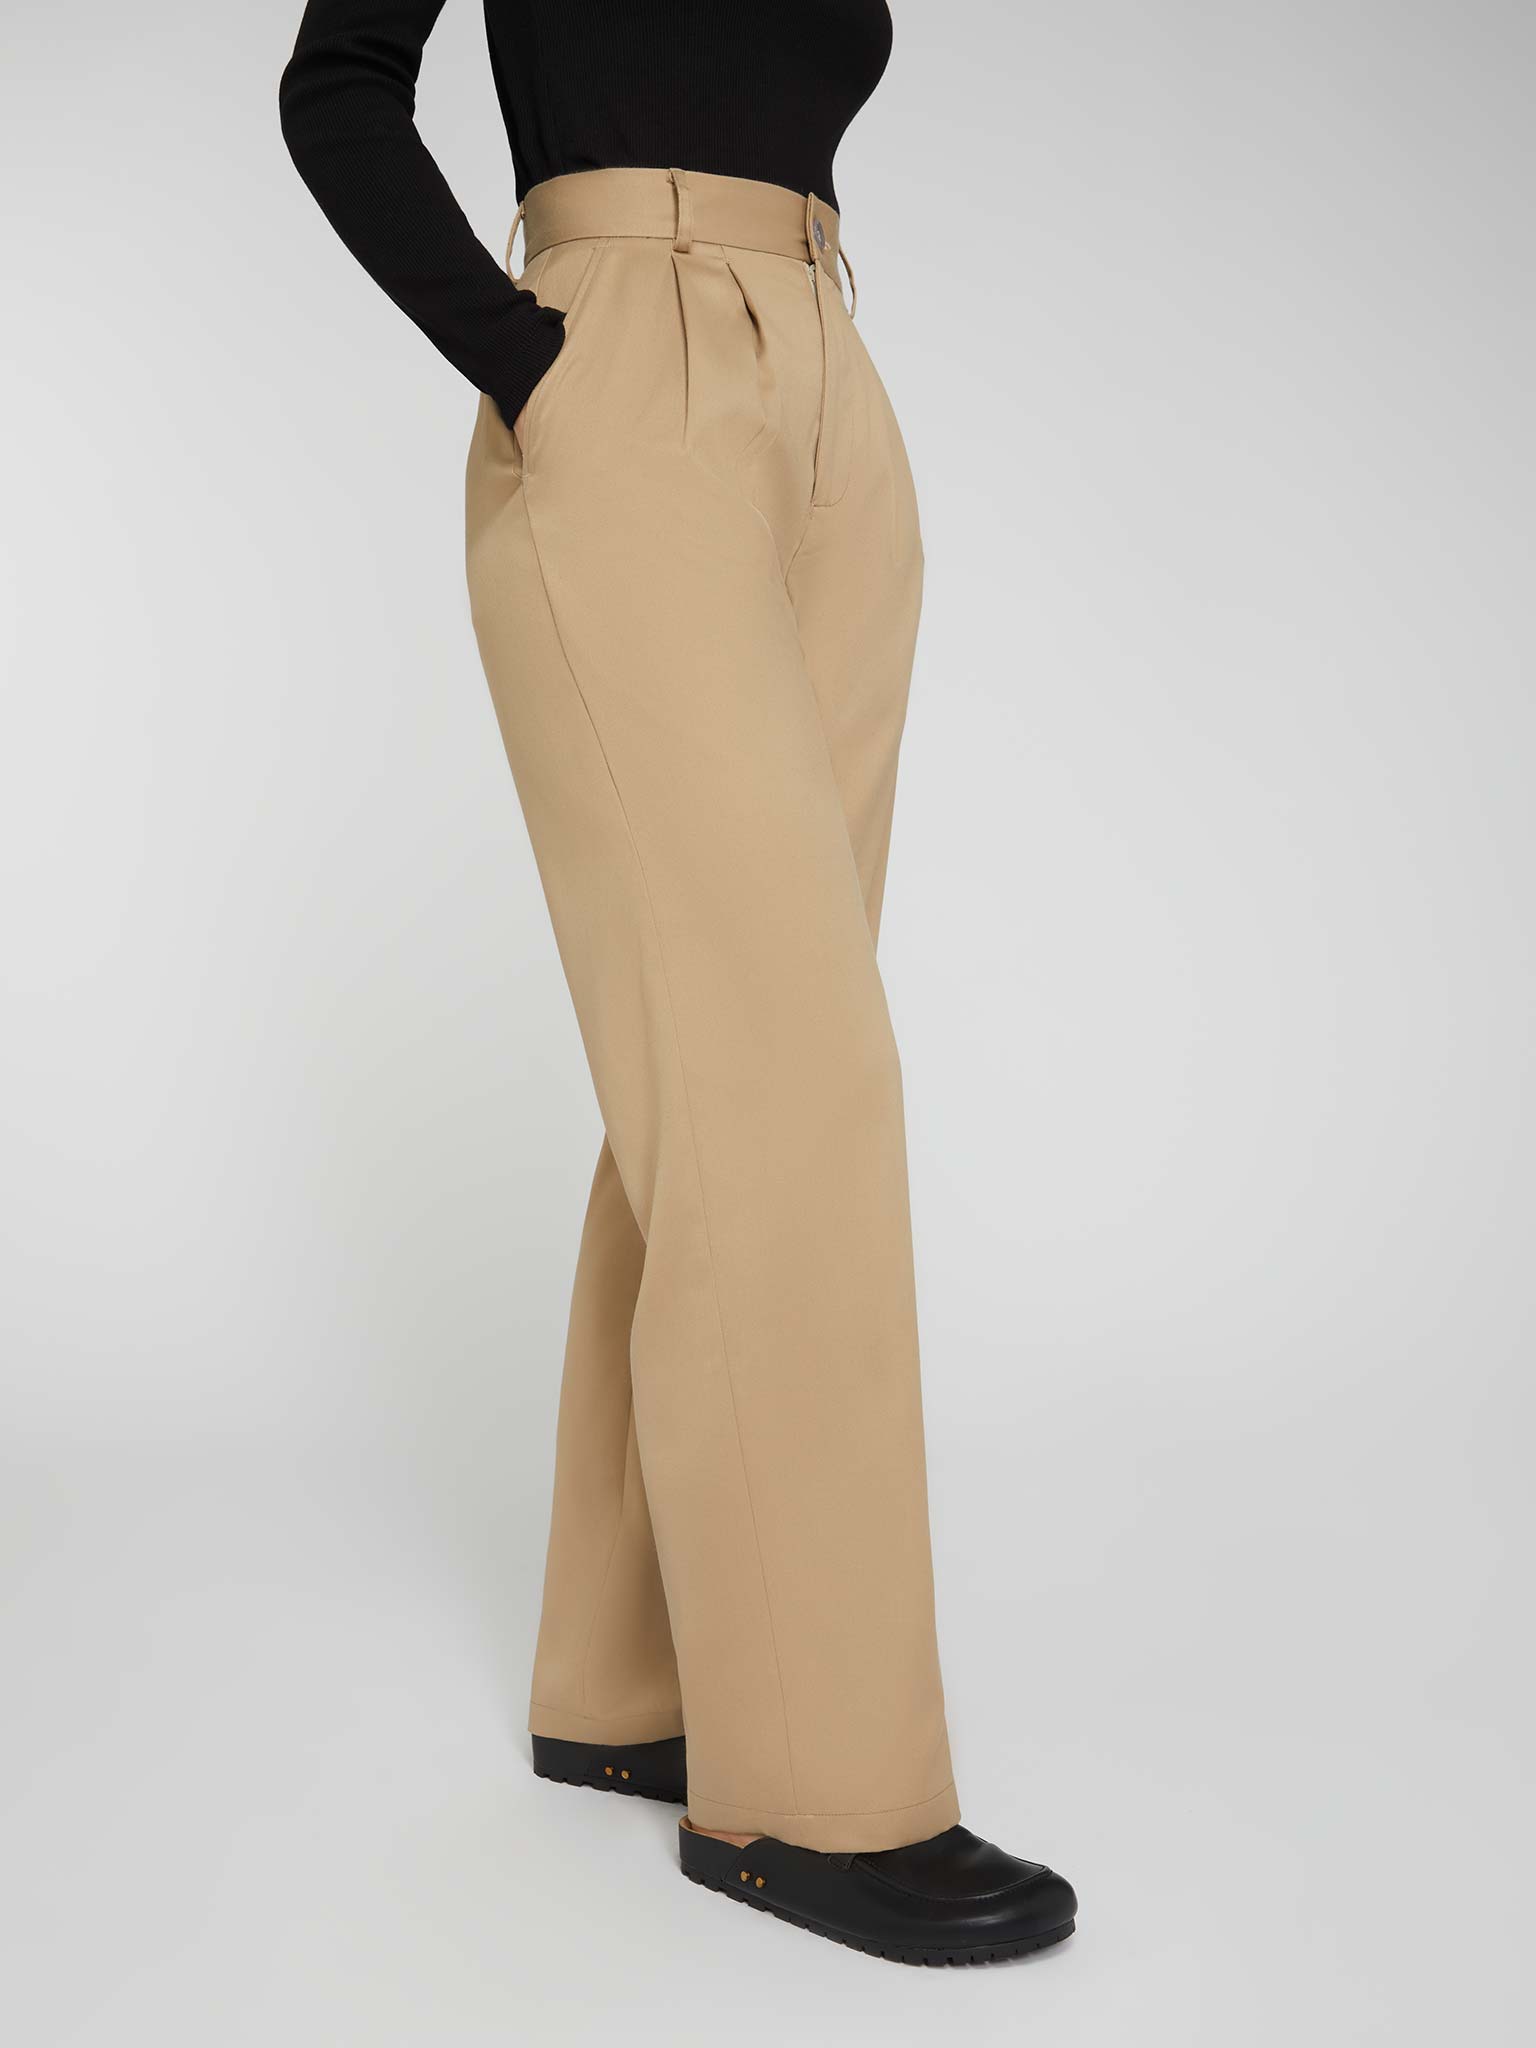 Women's Basics Pants (Bamboo Cotton) - Warm Taupe – Nest Designs